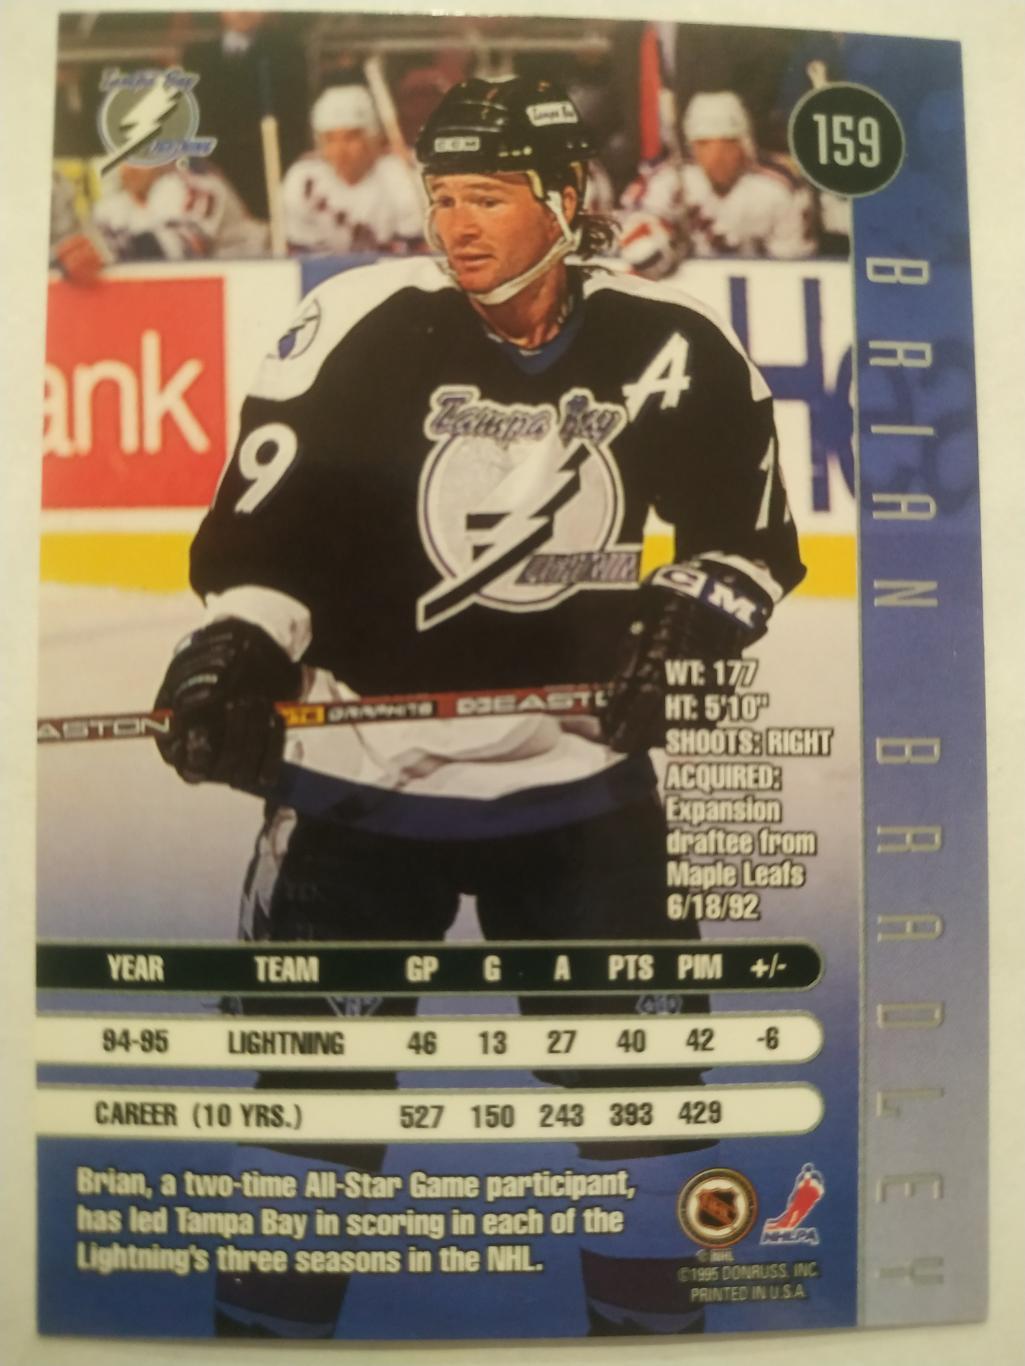 ХОККЕЙ КАРТОЧКА НХЛ DONRUSS LEAF 1995-96 BRIAN BRADLEY TAMPA BAY LIGHNTING #159 1